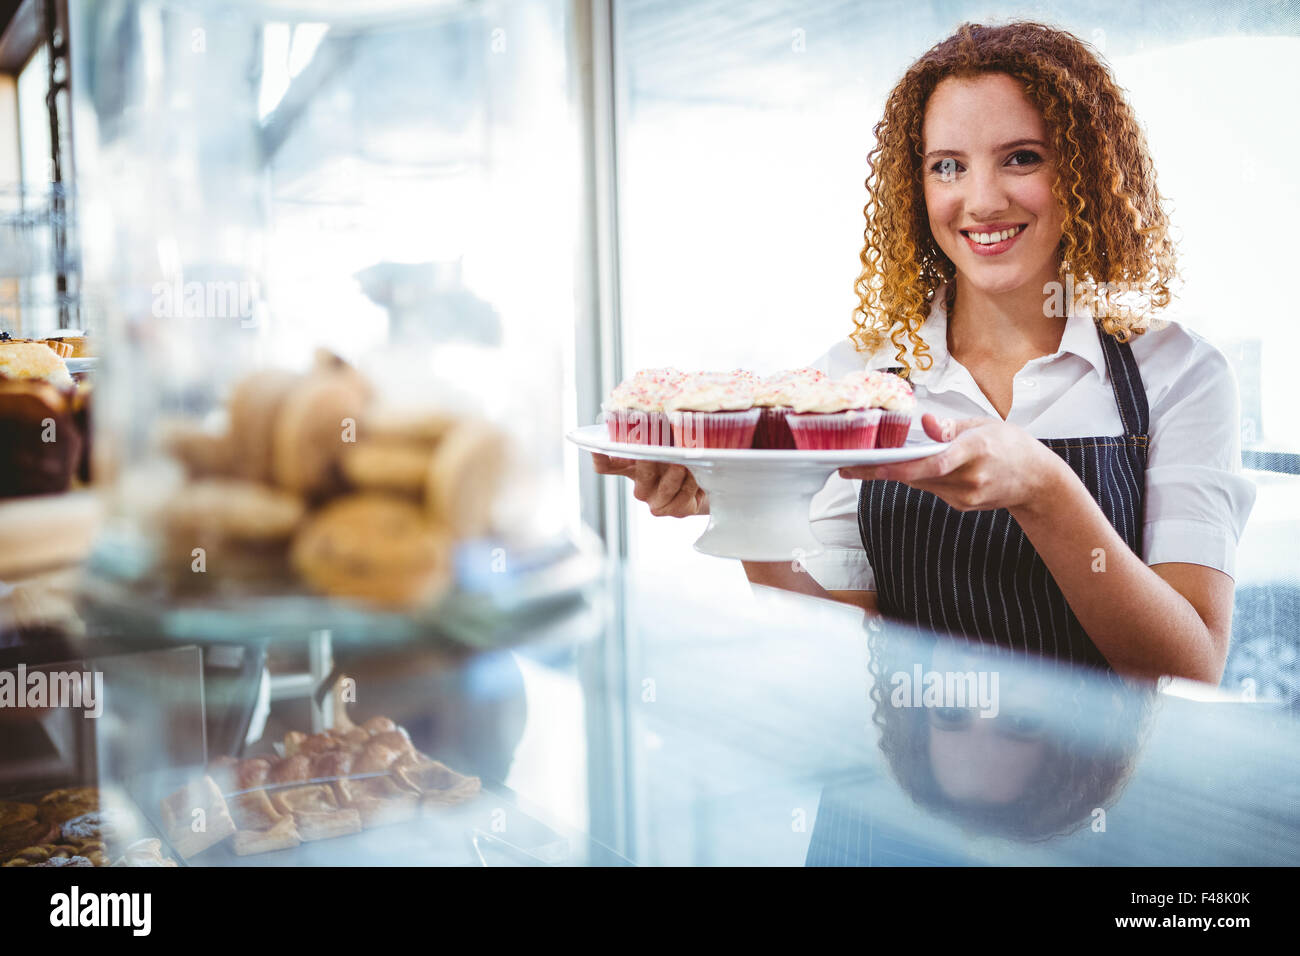 Pretty barista preparing plate with cupcakes Stock Photo